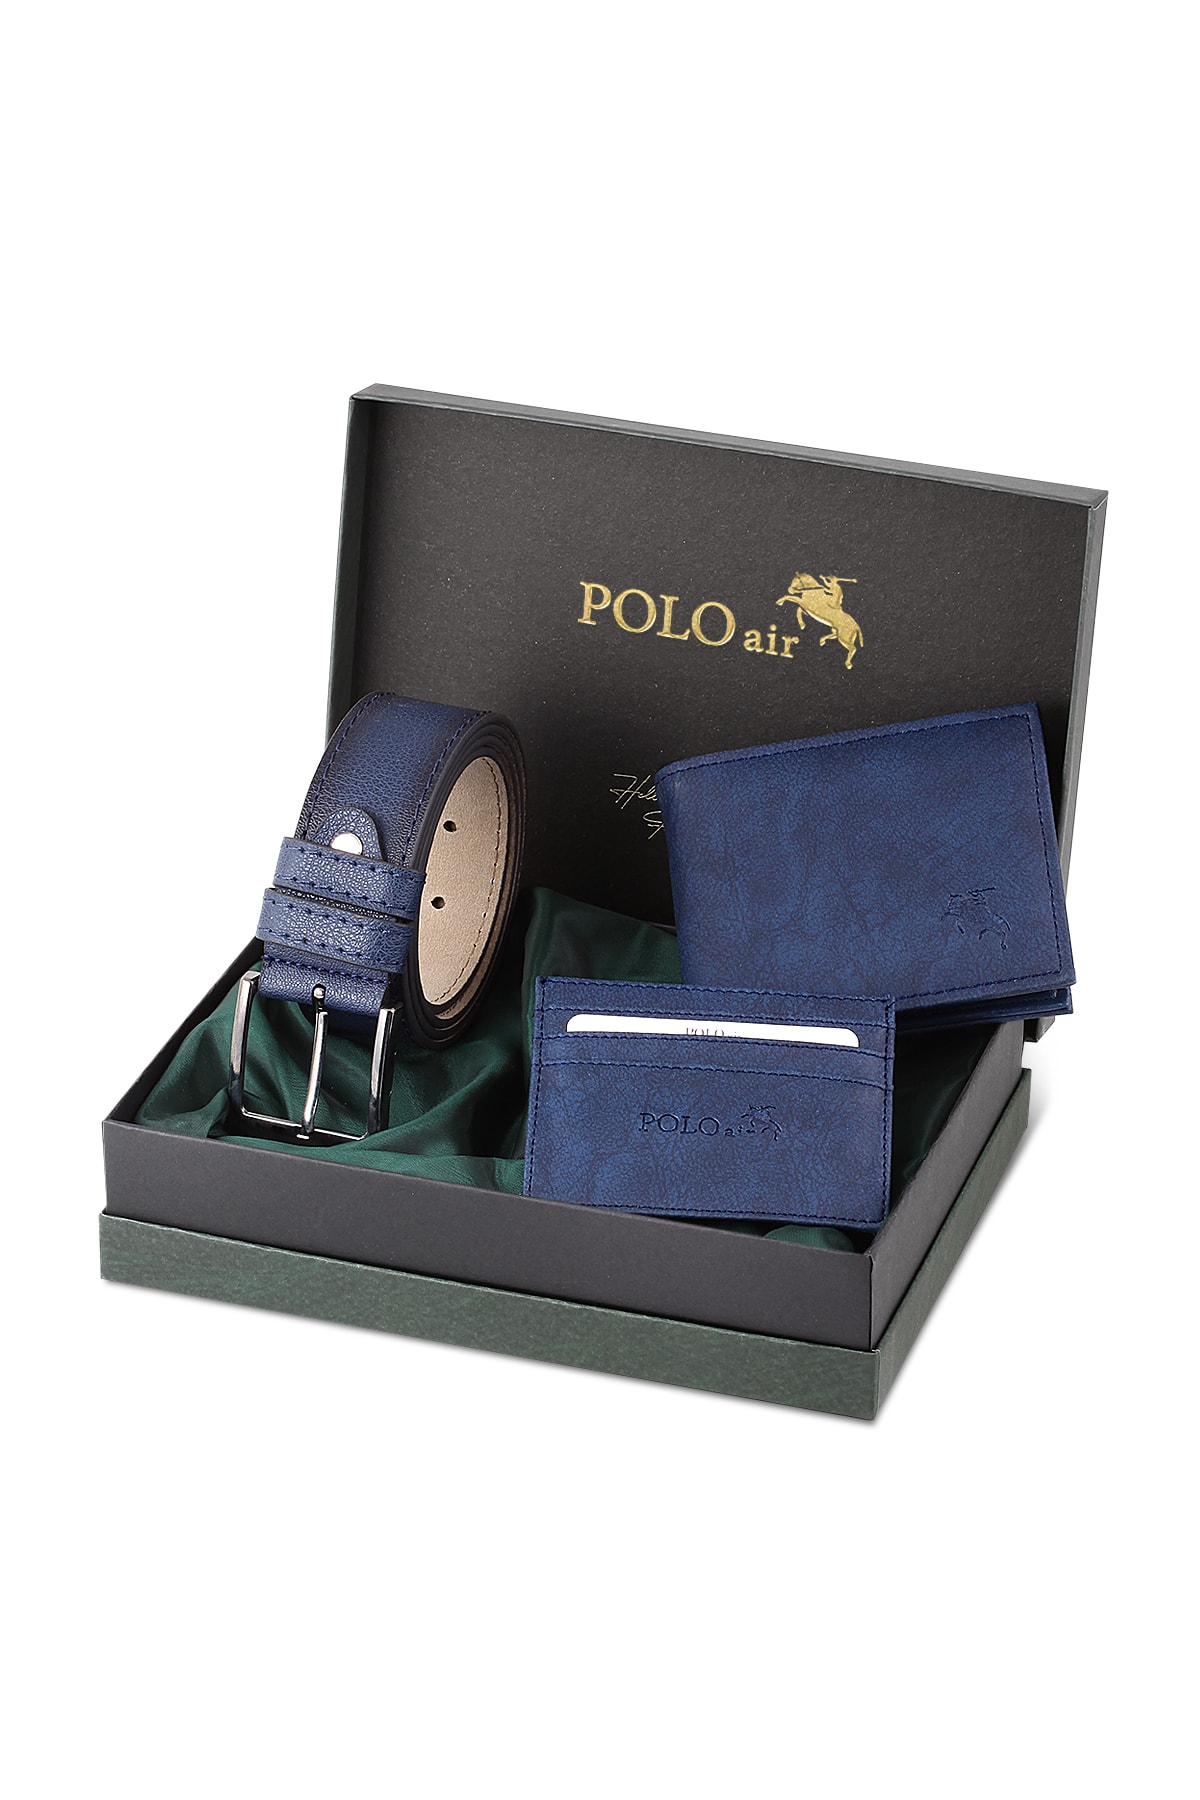 Polo Air Belt Wallet Card Holder Dark Blue Set In Gift Box